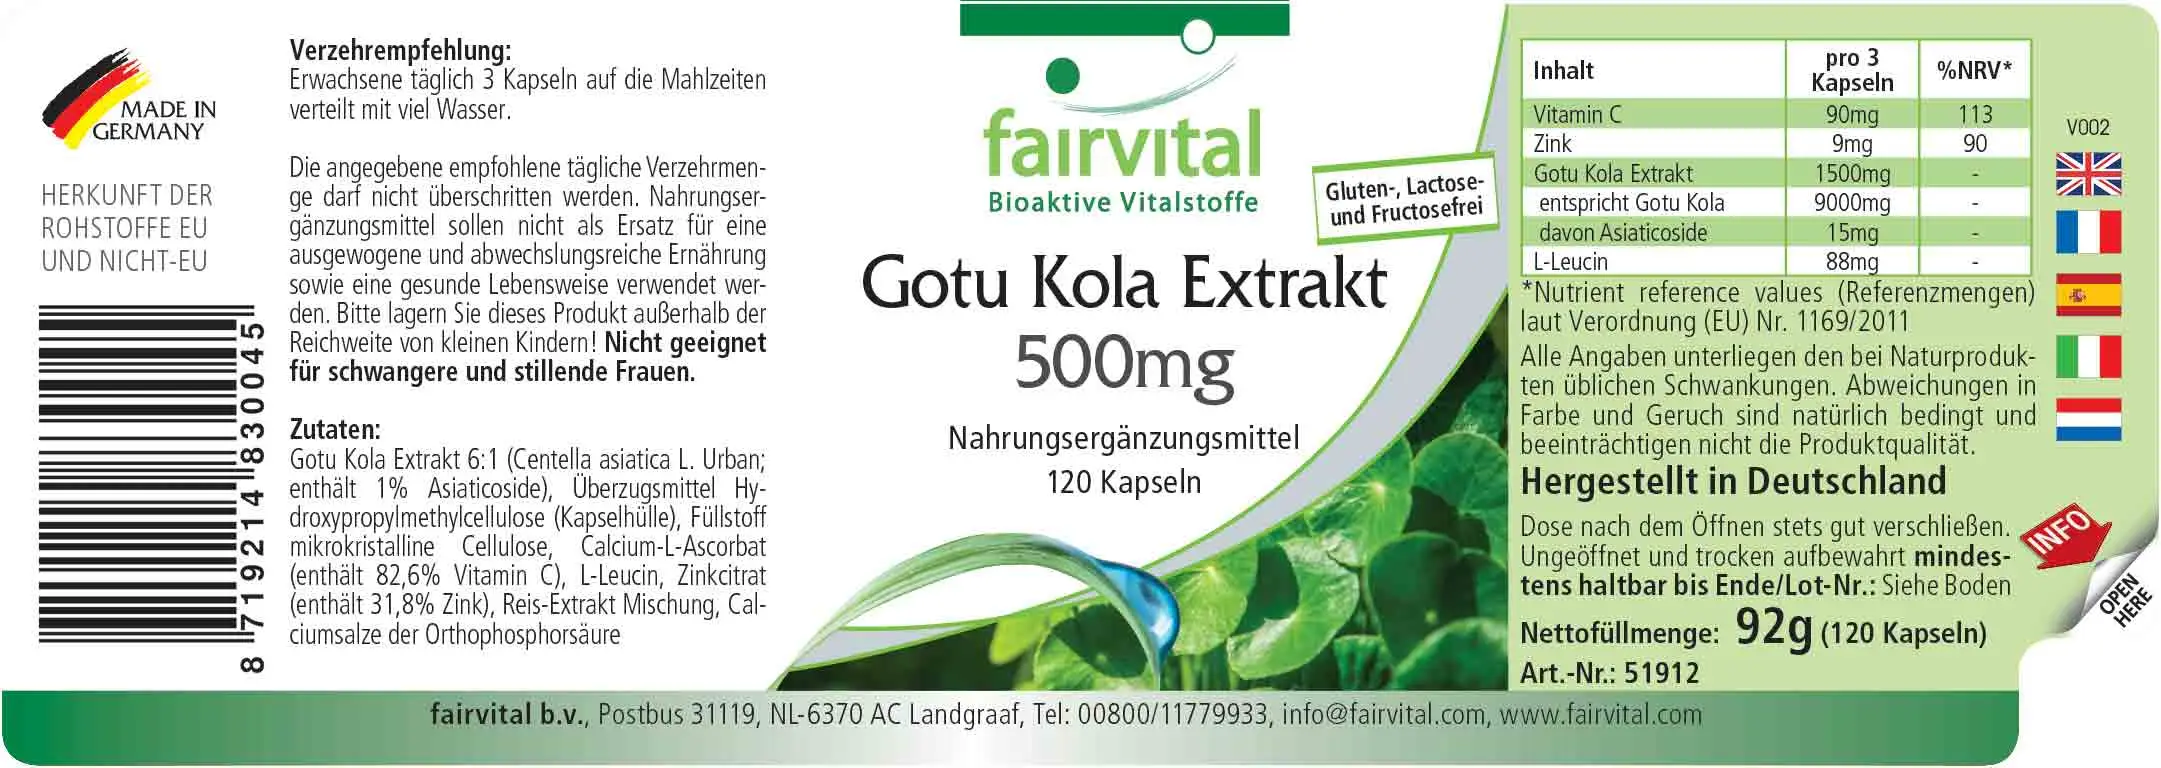 Gotu Kola Extract 500mg